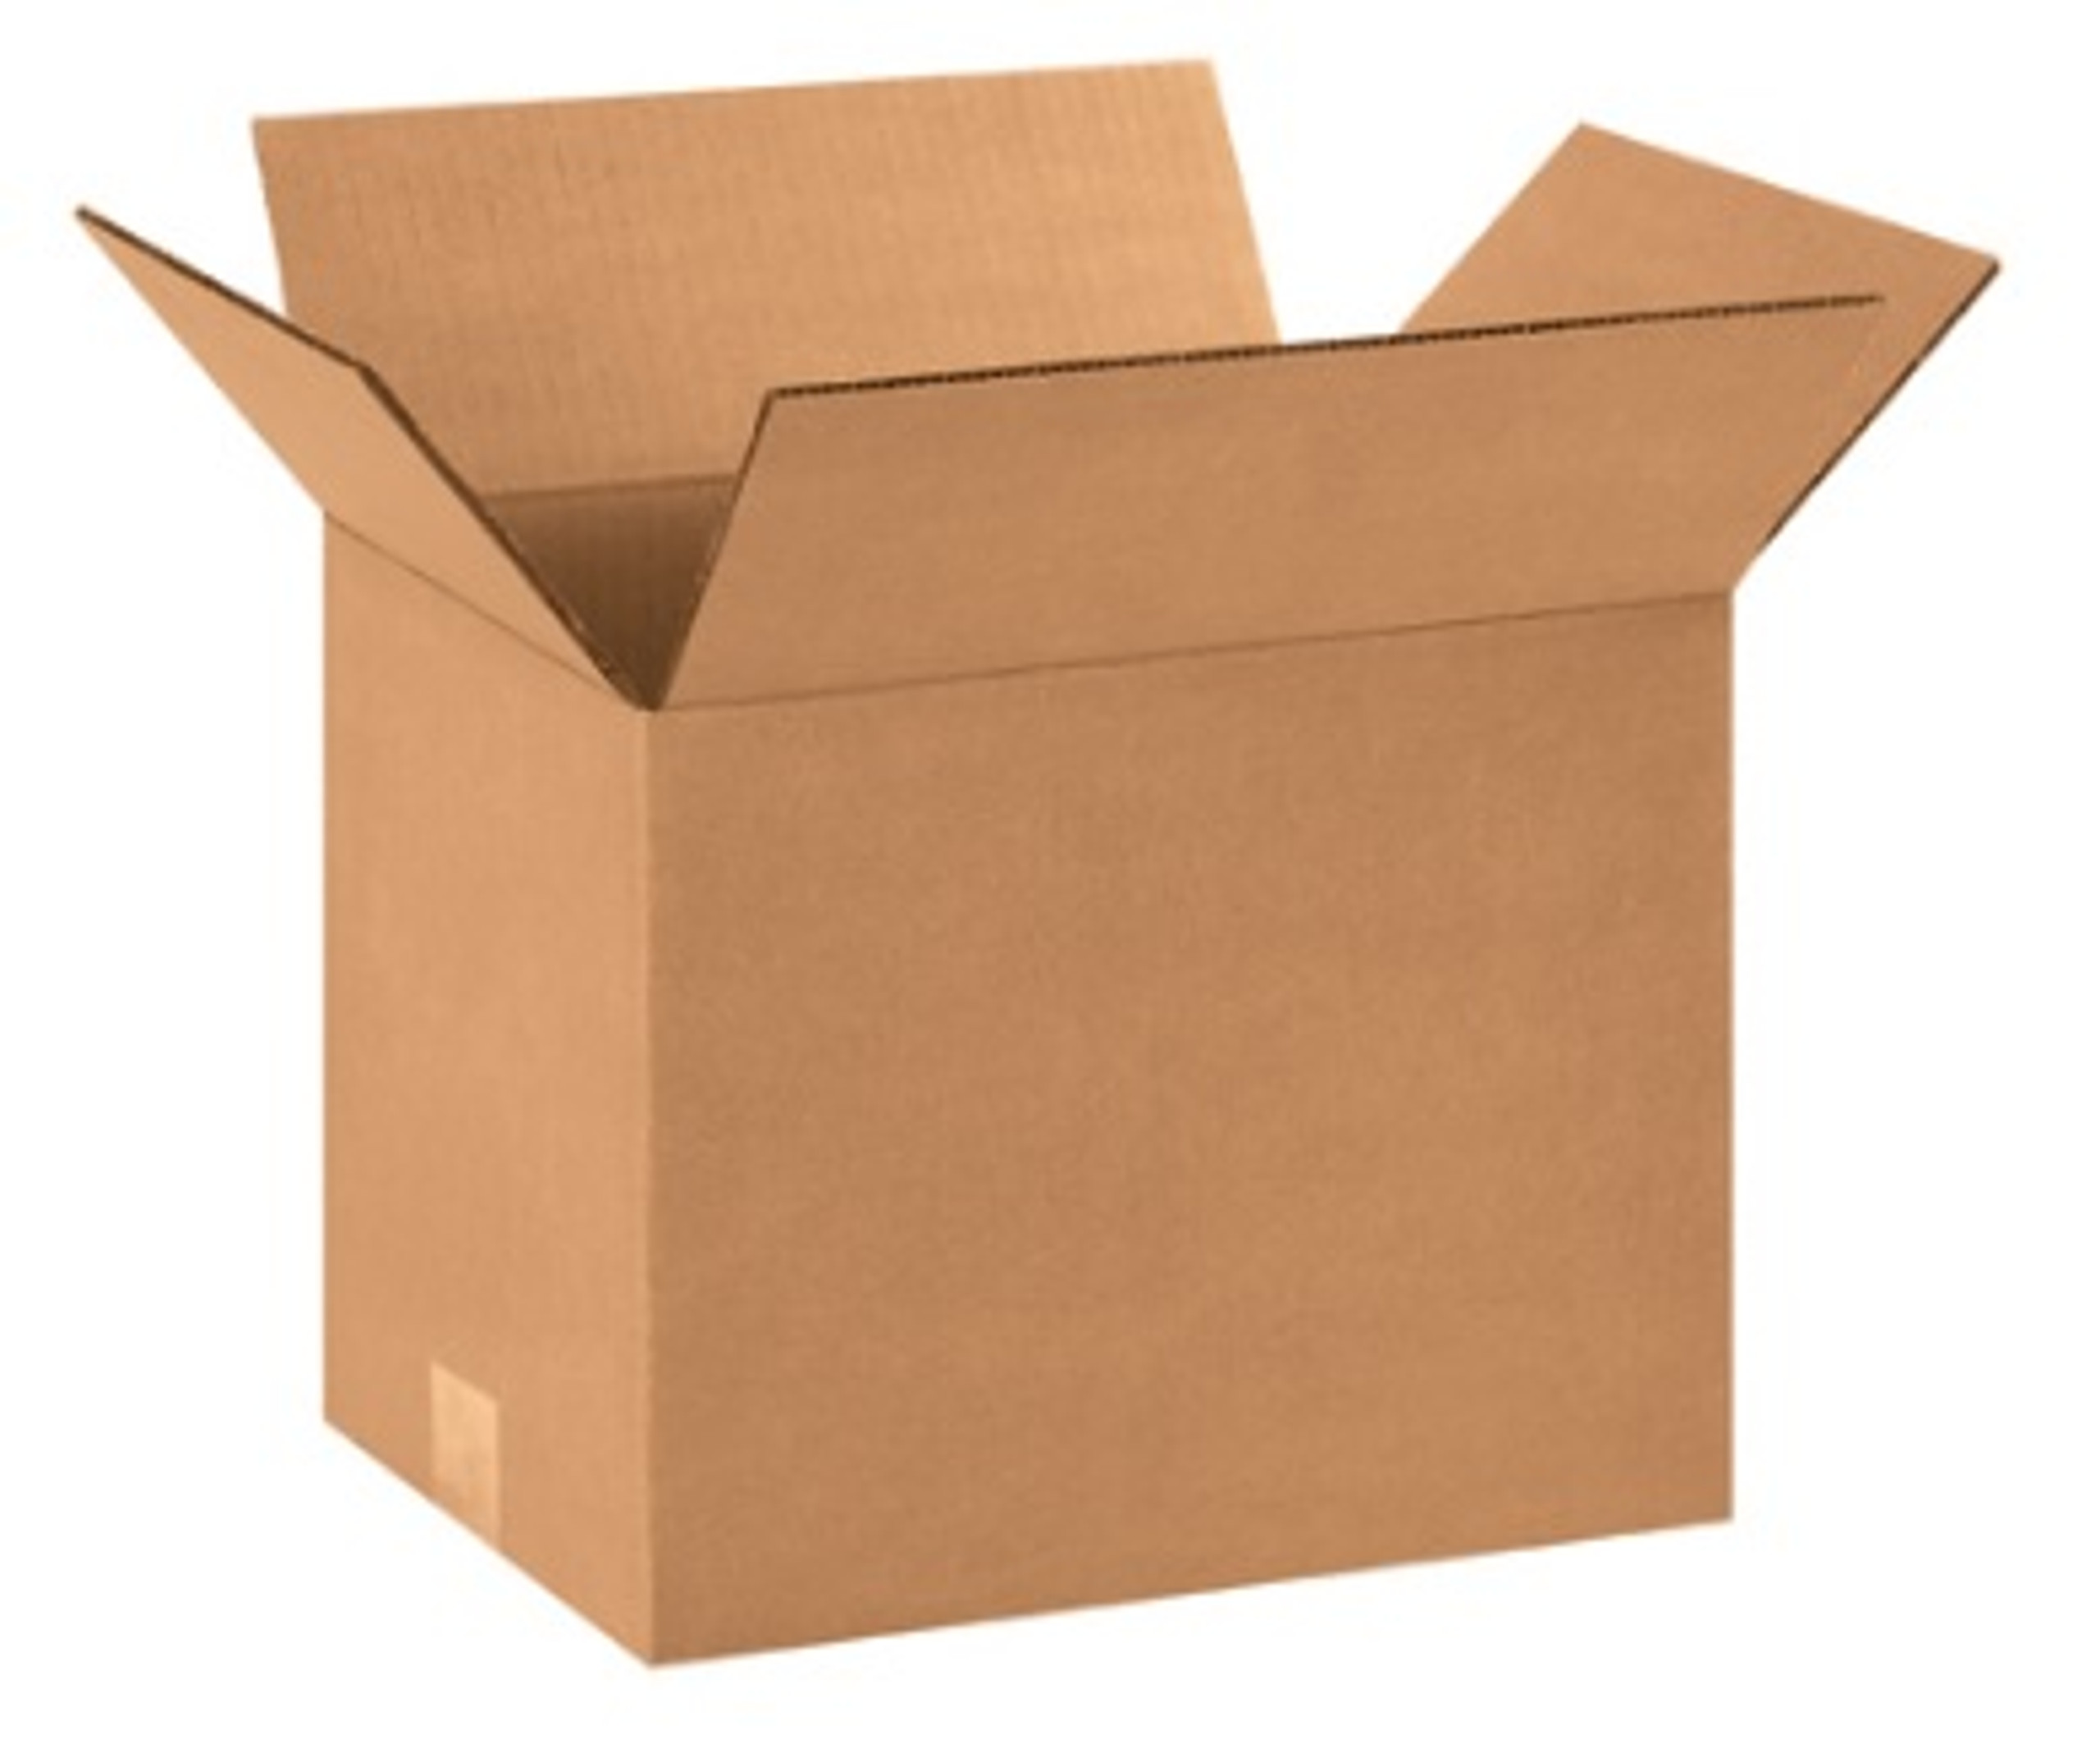 12-x-9-x-4-white-corrugated-cardboard-shipping-boxes-25-bundle